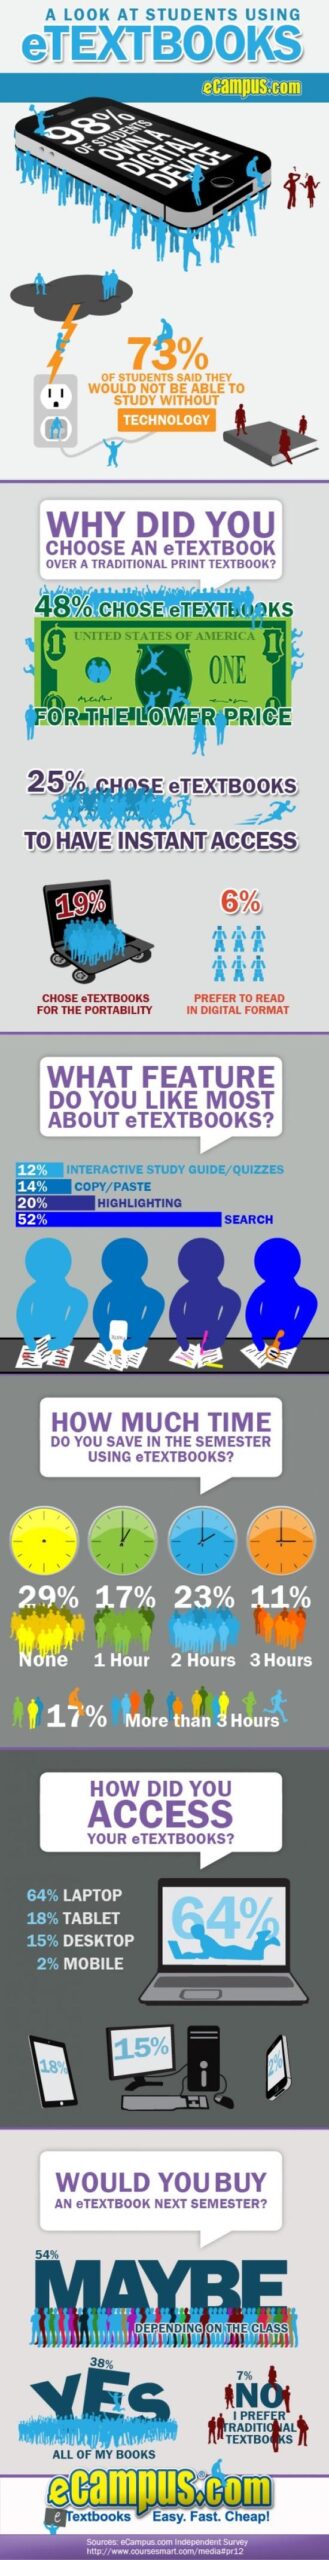 E-Textbooks Taking Over Education [INFOGRAPHIC] | LearnDash